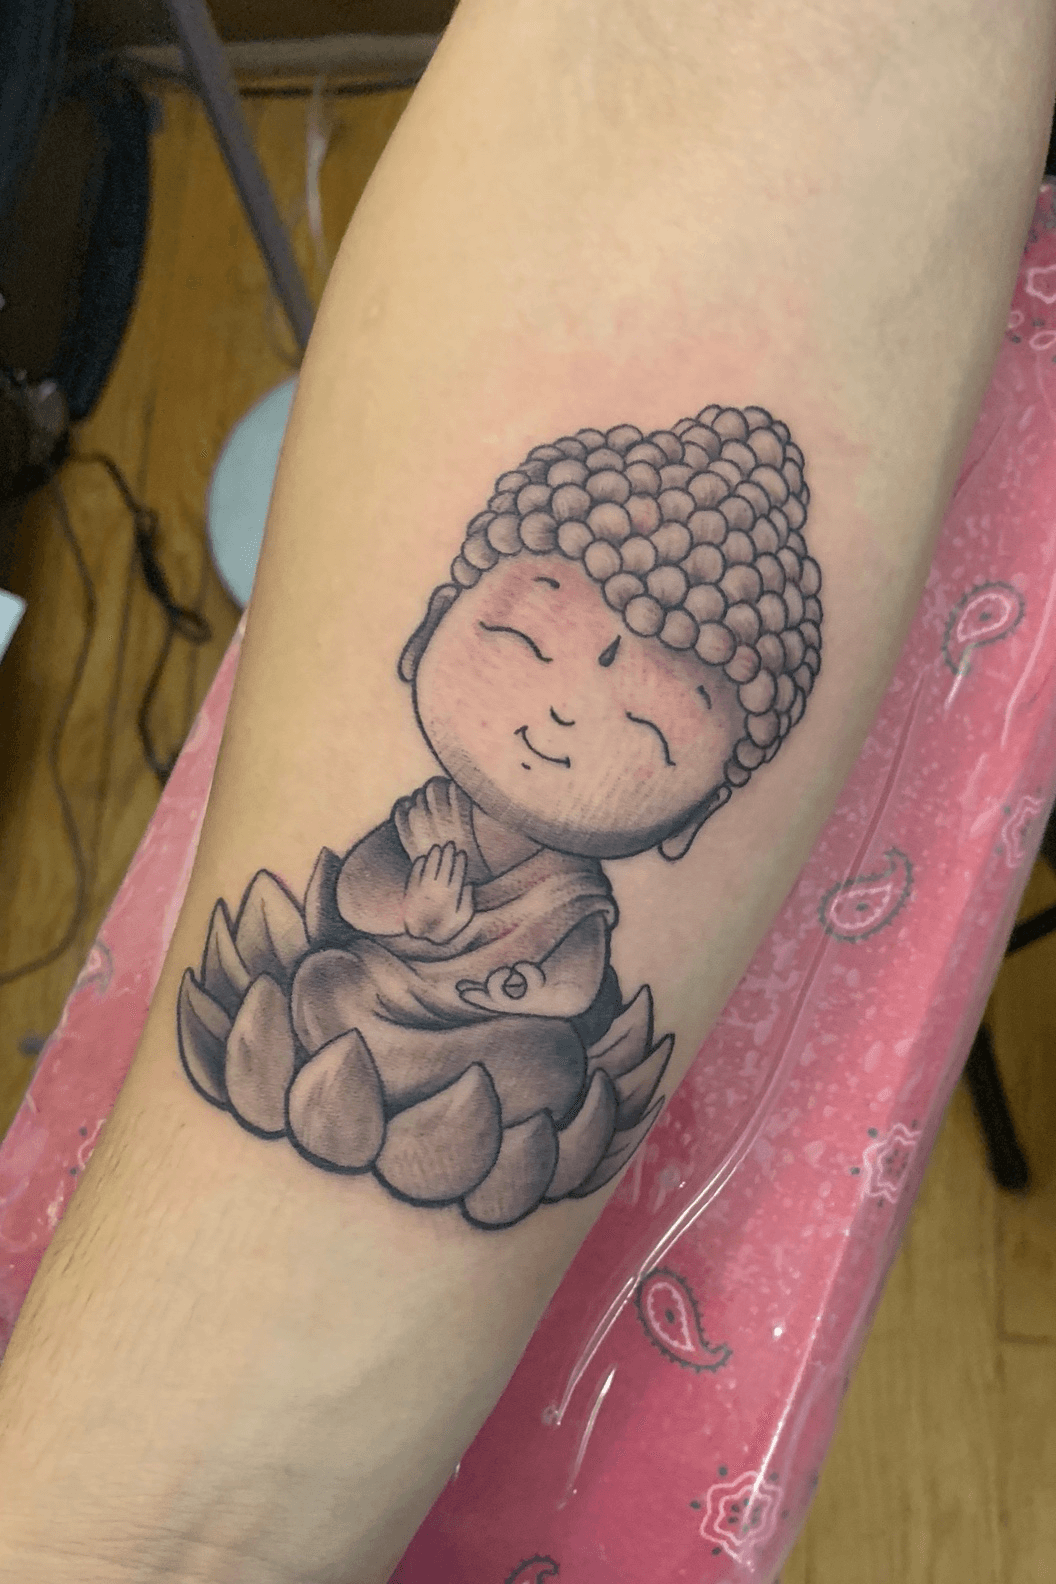 Buddha flower large 8.25" arm tattoo body tattoos temporary | eBay